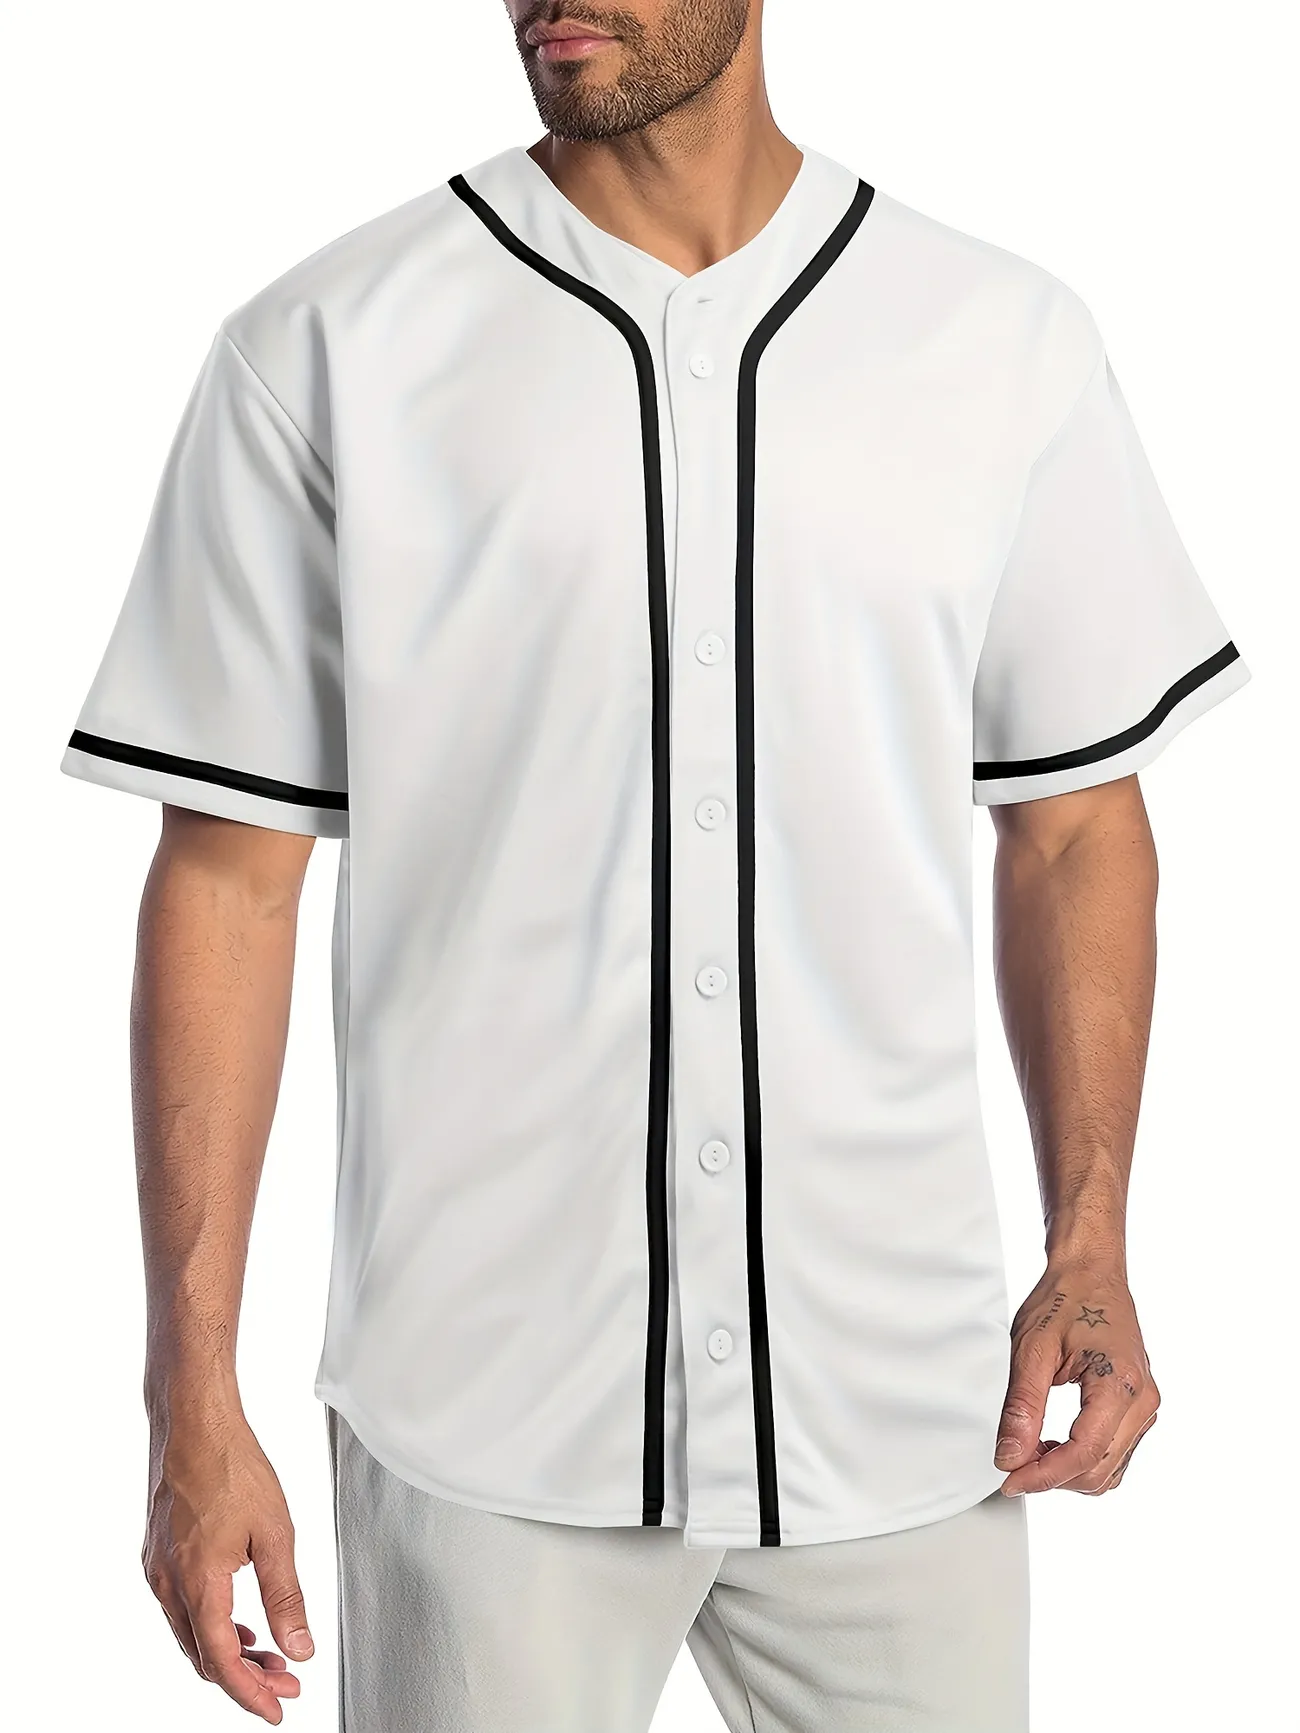 Men's #8 24 Legend Baseball Jersey, Classic Design Button Up Short Sleeve Baseball Shirt for Training Competition,Temu